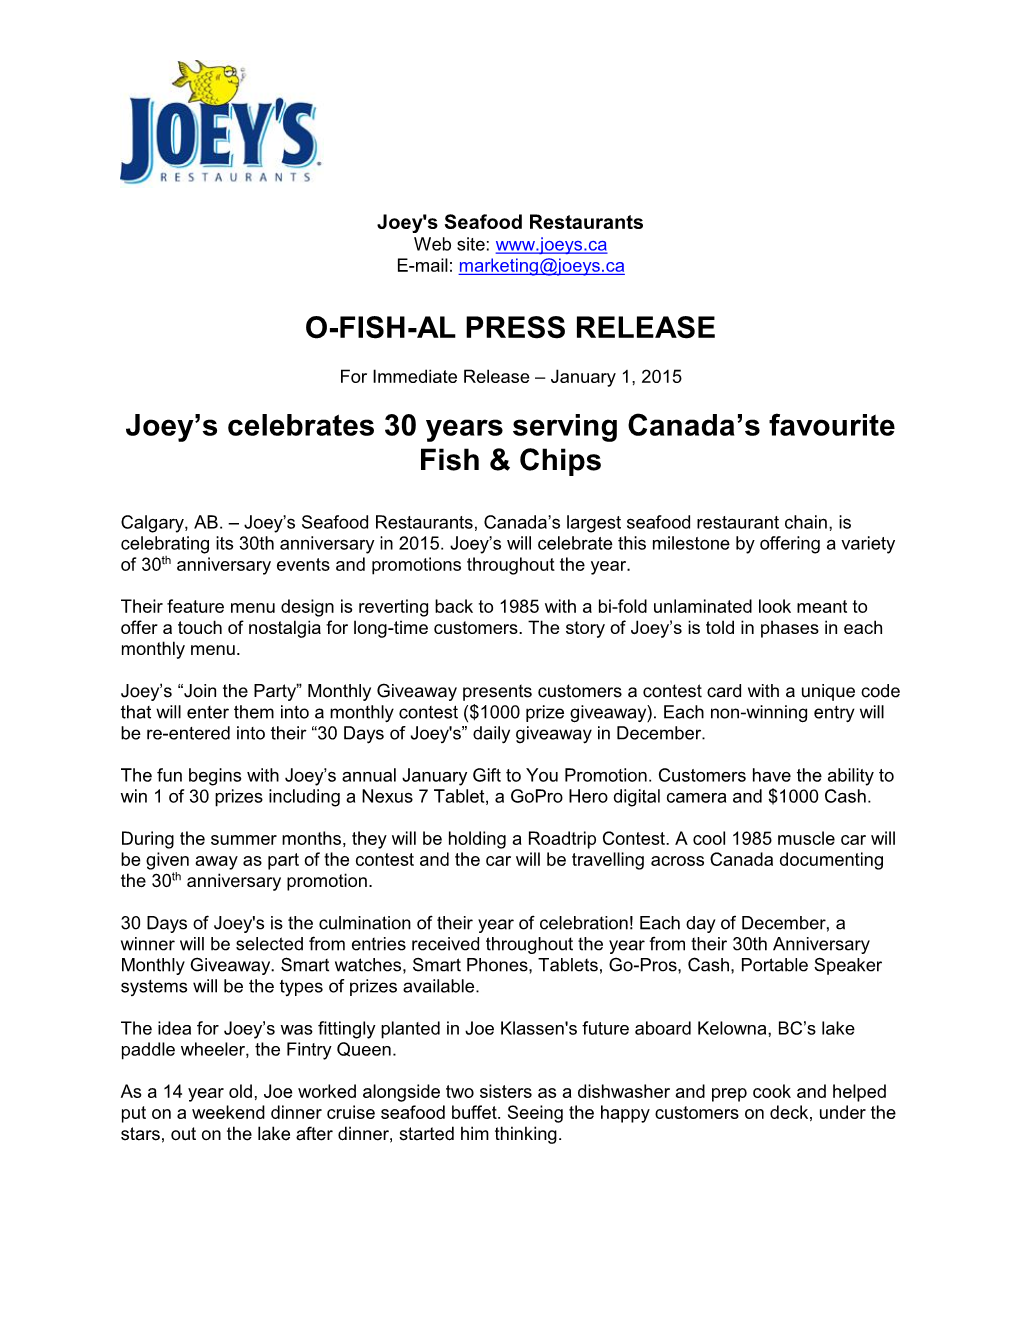 O-FISH-AL PRESS RELEASE Joey's Celebrates 30 Years Serving